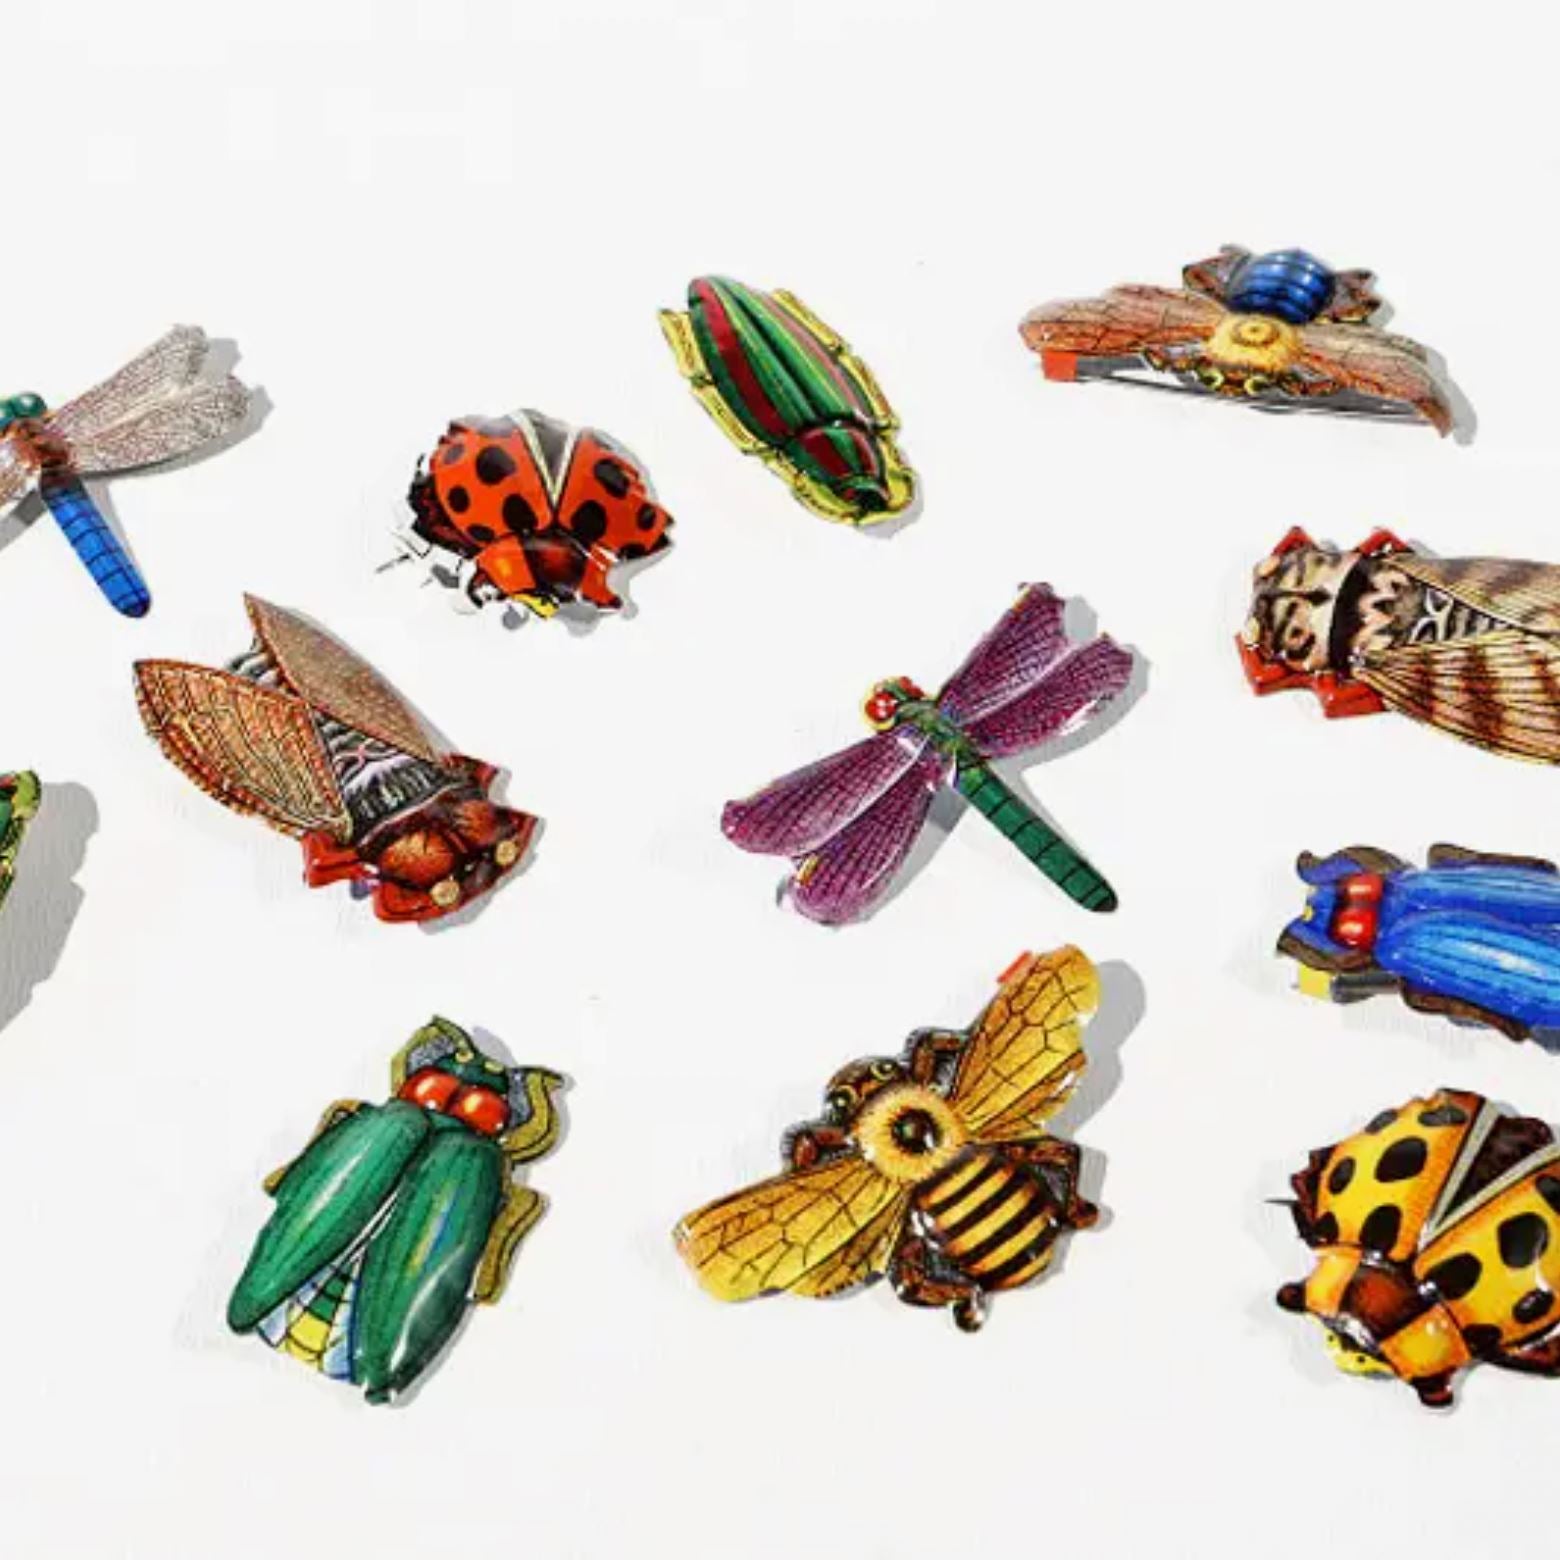 Nostalgic Japanese Insect Pin Badges - Third Drawer Down